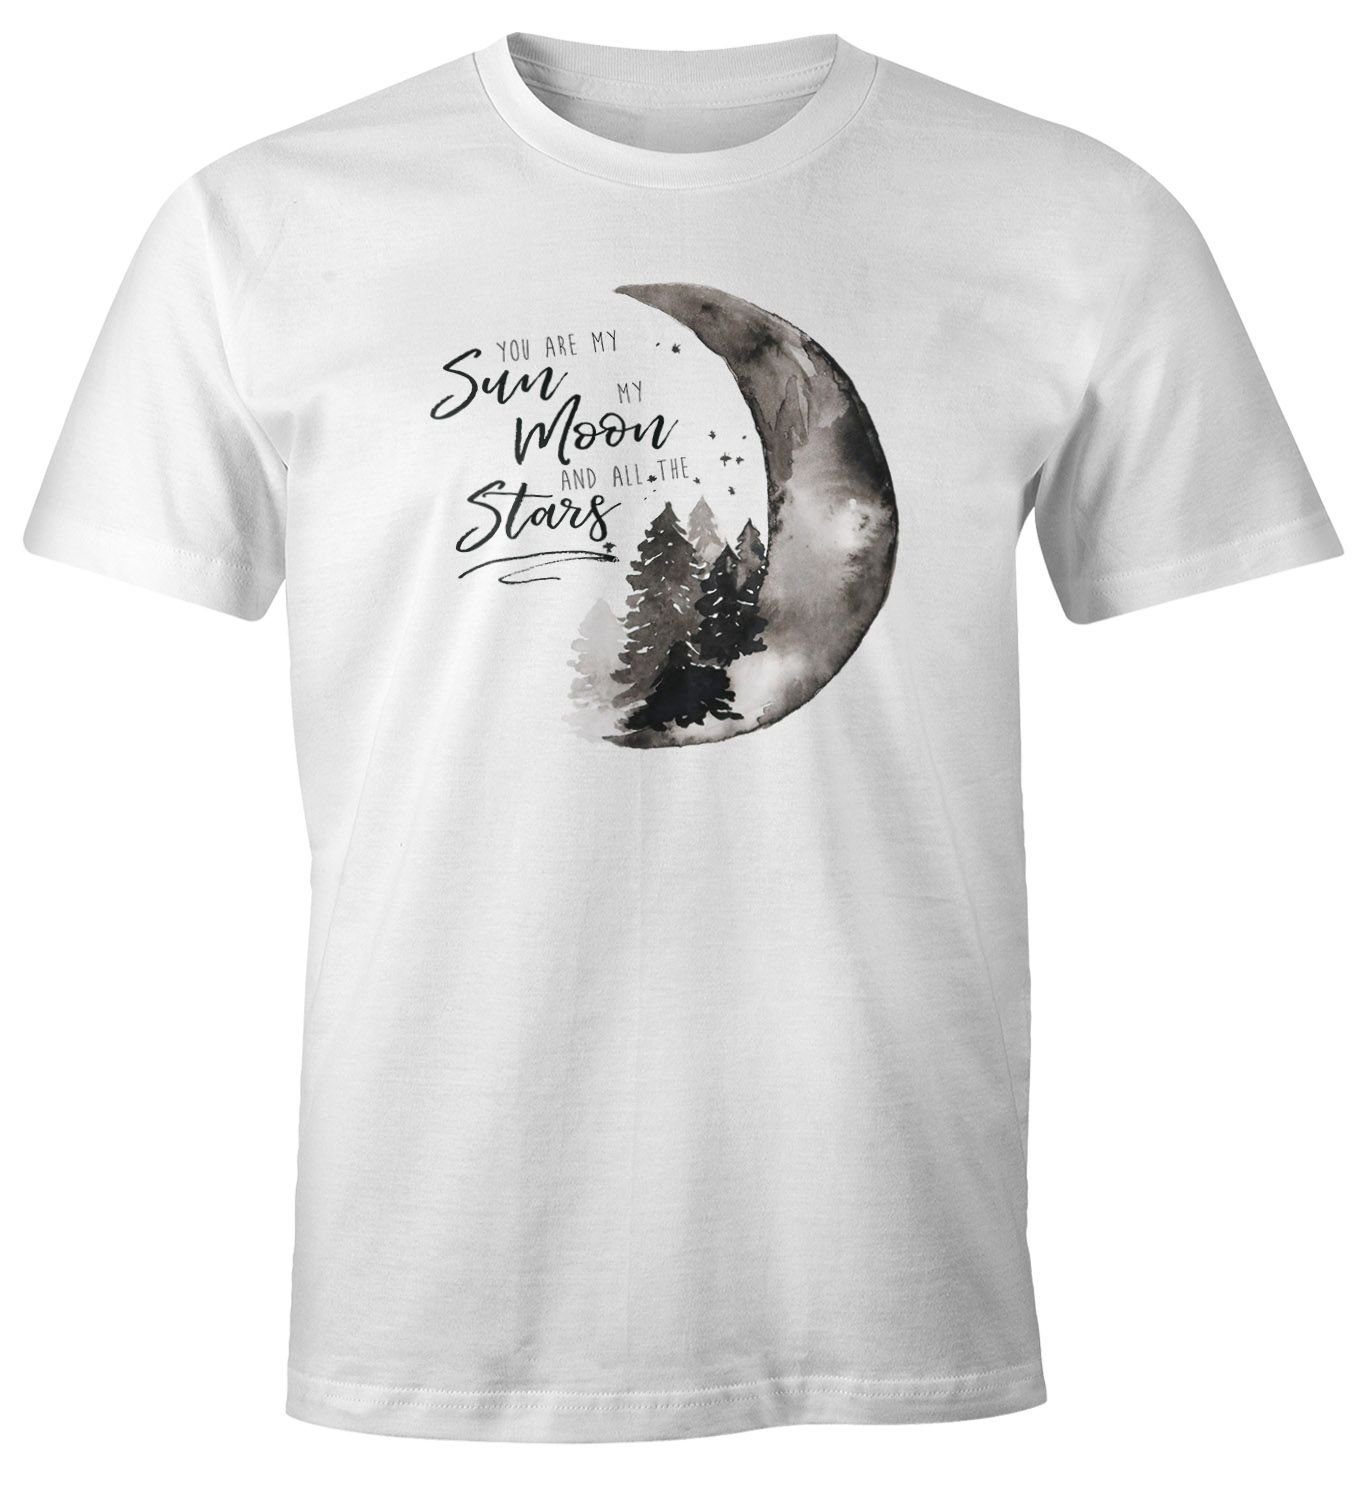 Liebe Print-Shirt Moonworks® T-Shirt Herren sun, my Print moon Geschenk and You stars Love MoonWorks all my mit weiß Spruch are Quote the